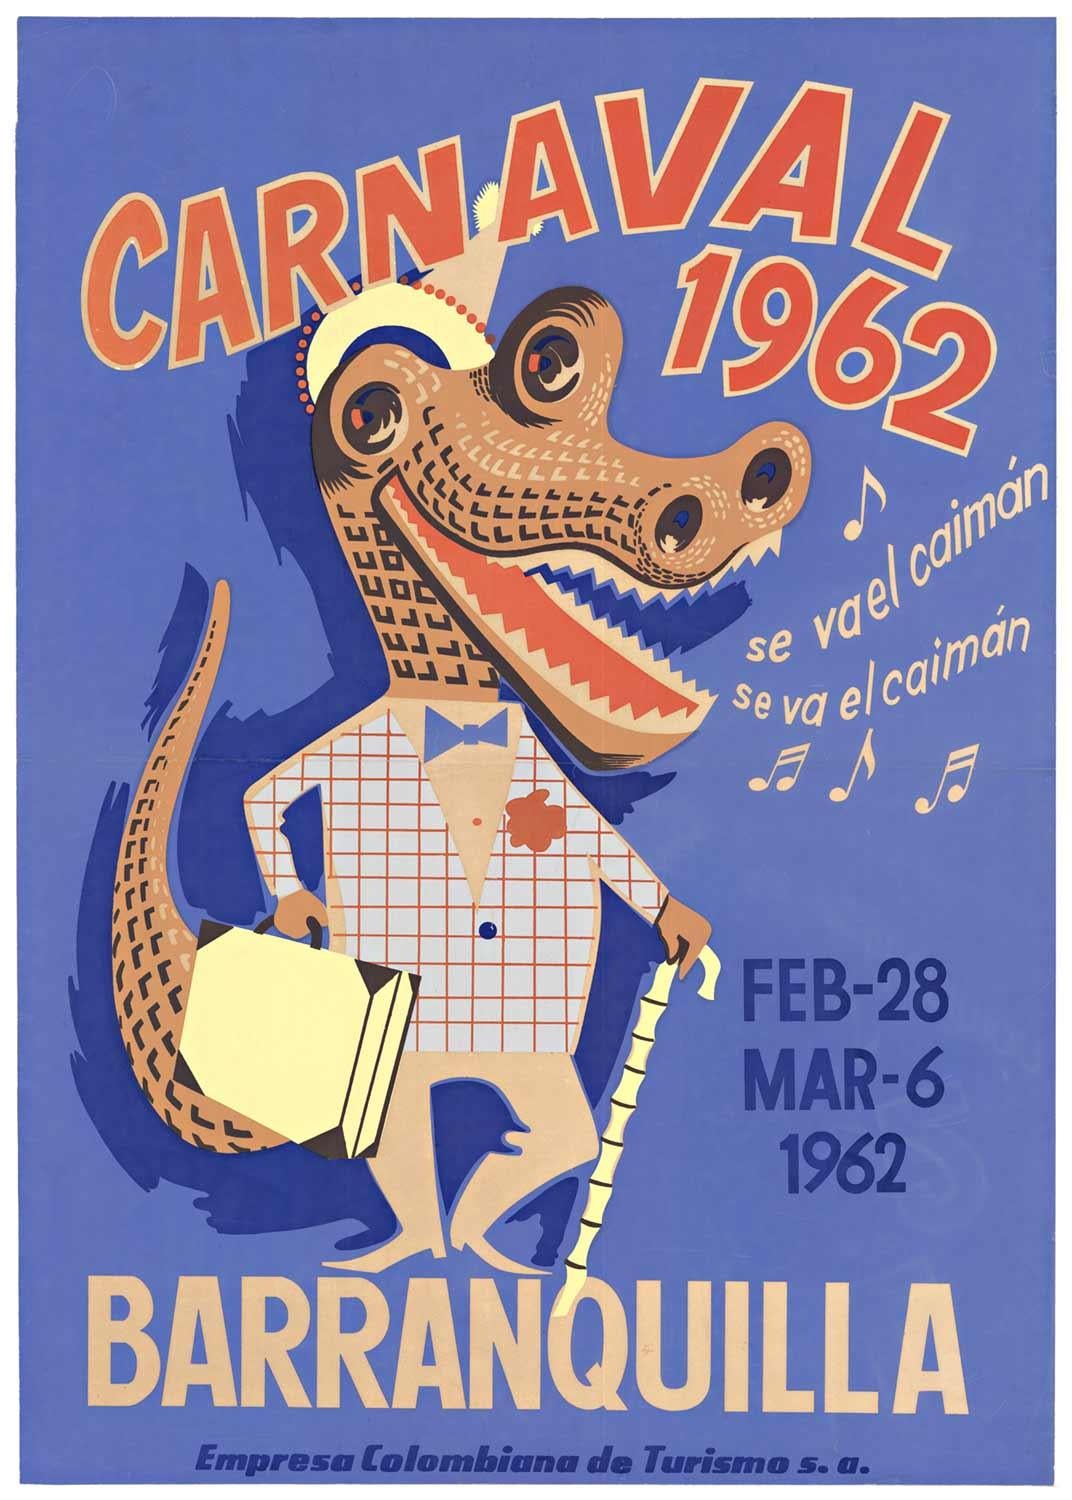 Unknown Animal Print - Original "Carnaval 1962 Barranquilla" vintage festival poster  Crocodile rocks